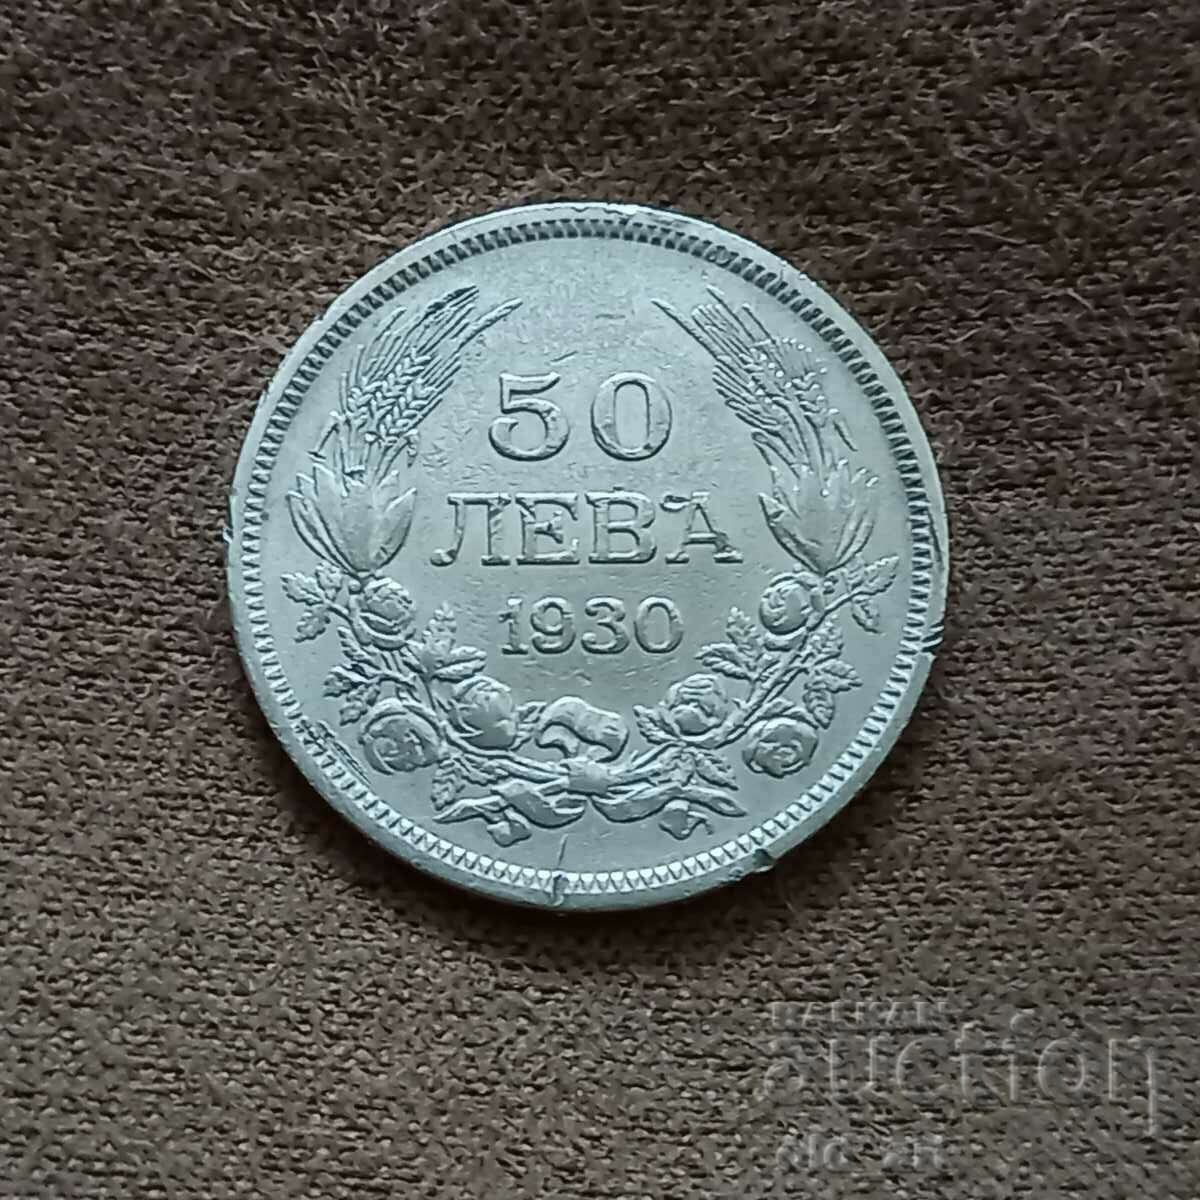 Coin - 50 BGN 1930